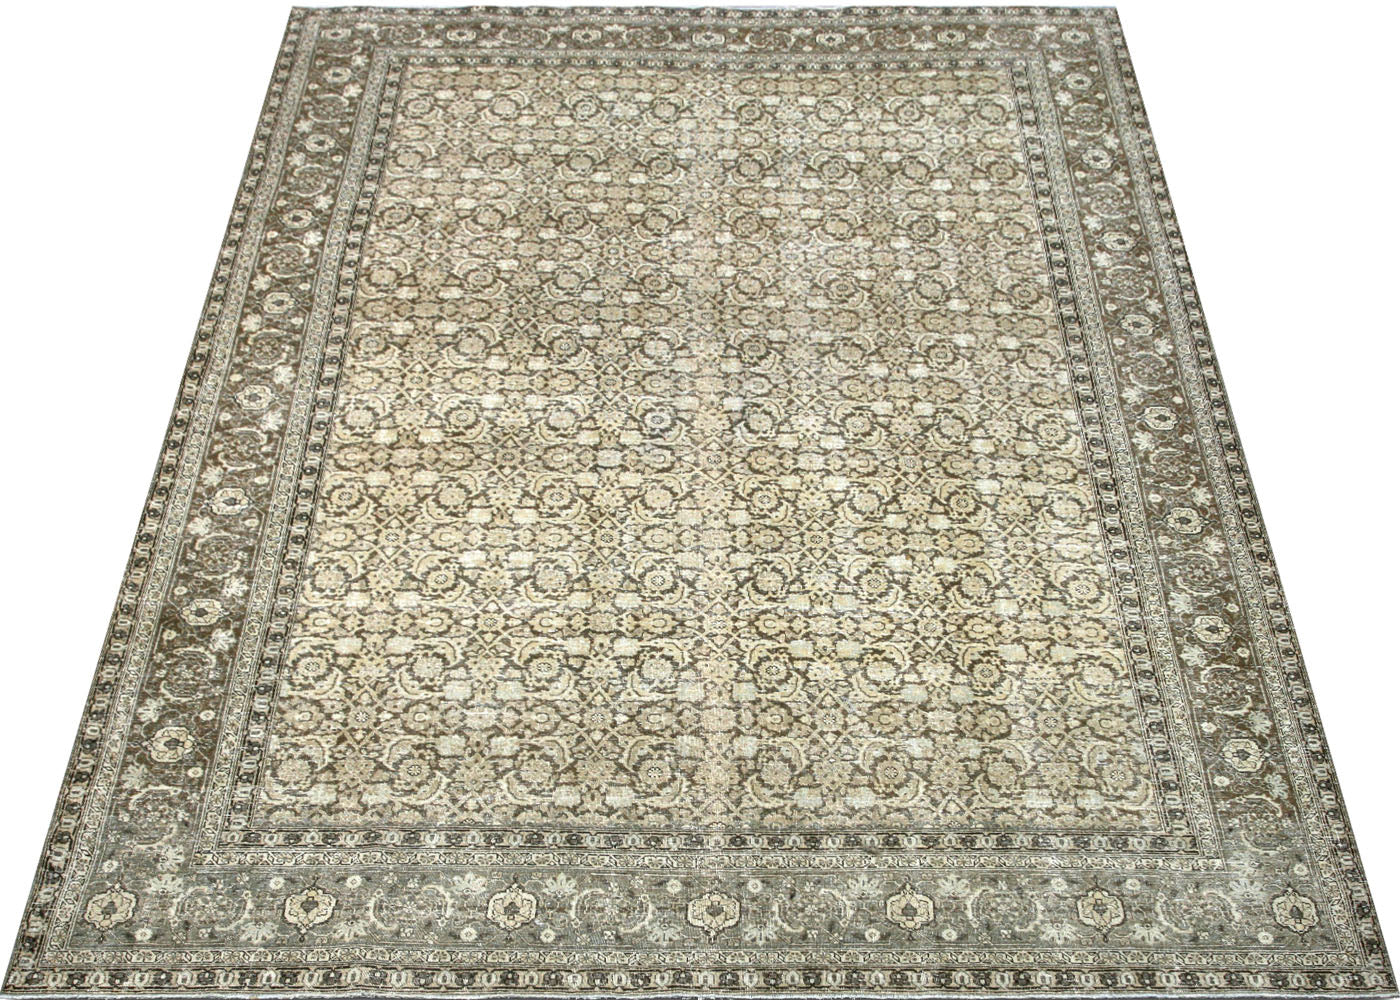 Semi Antique Persian Tabriz Rug - 9' x 12'1"